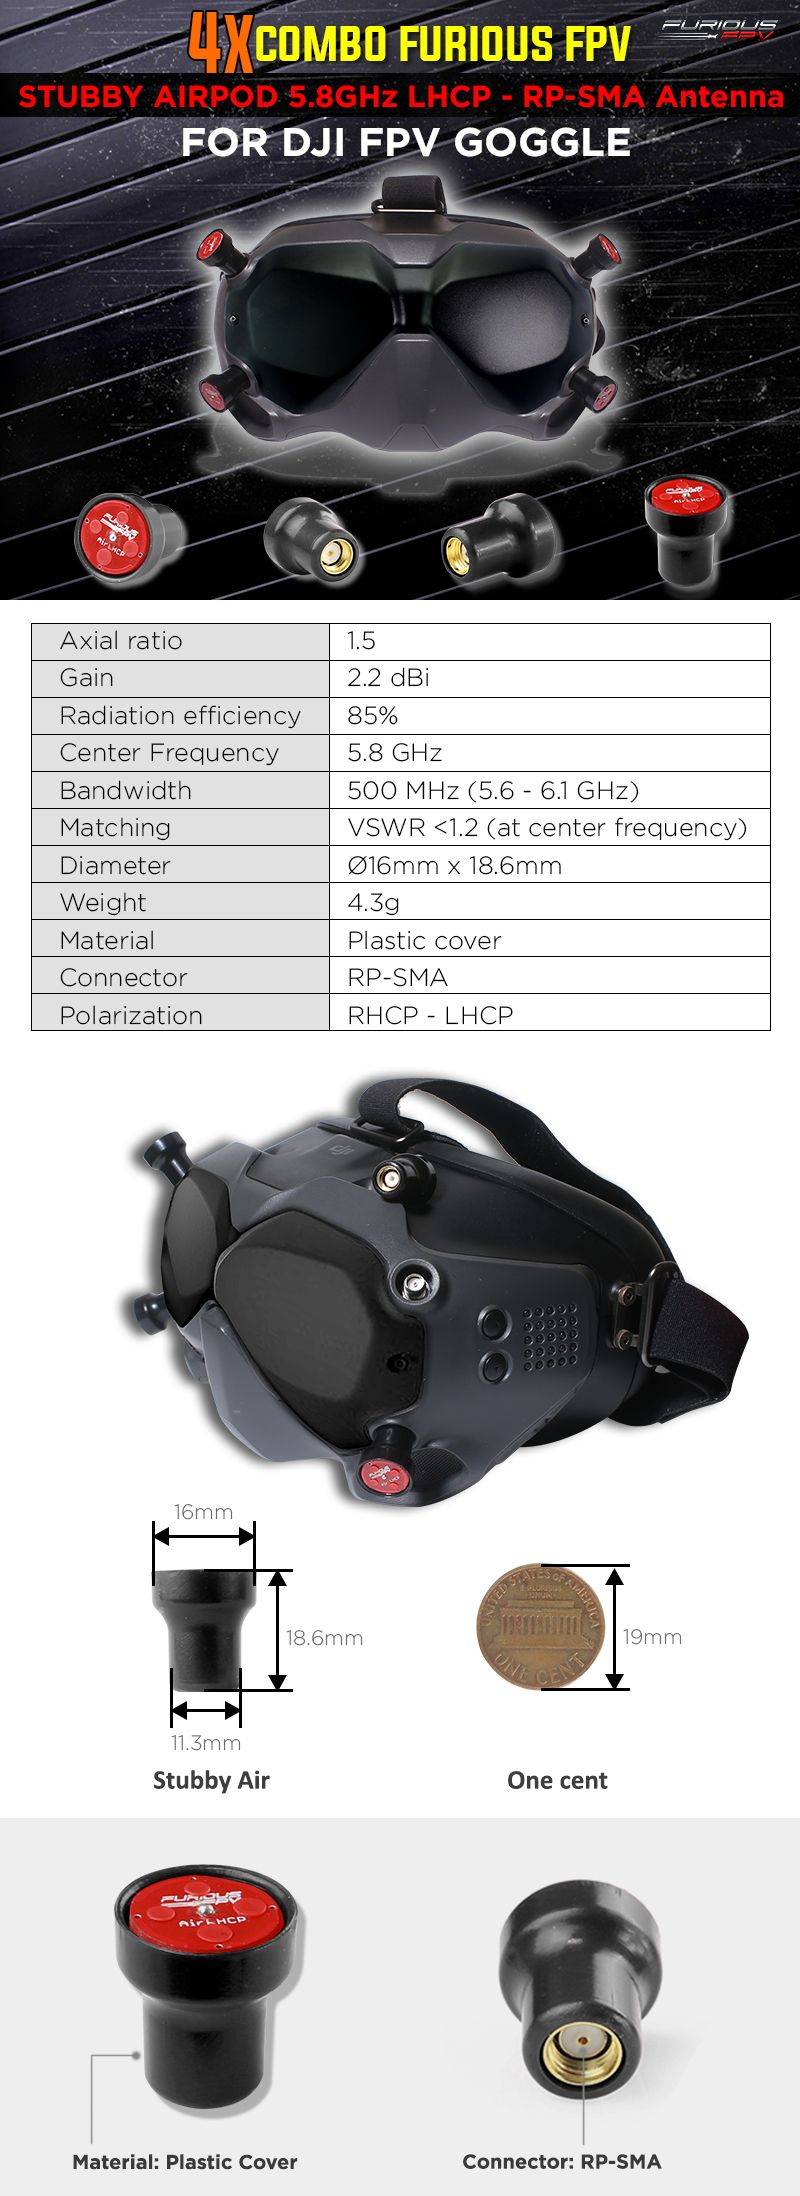 Furious FPV - Stubby Airpod 5.8GHz LHCP - RP-SMA Antenna for DJI FPV Goggles 2 - Furious FPV